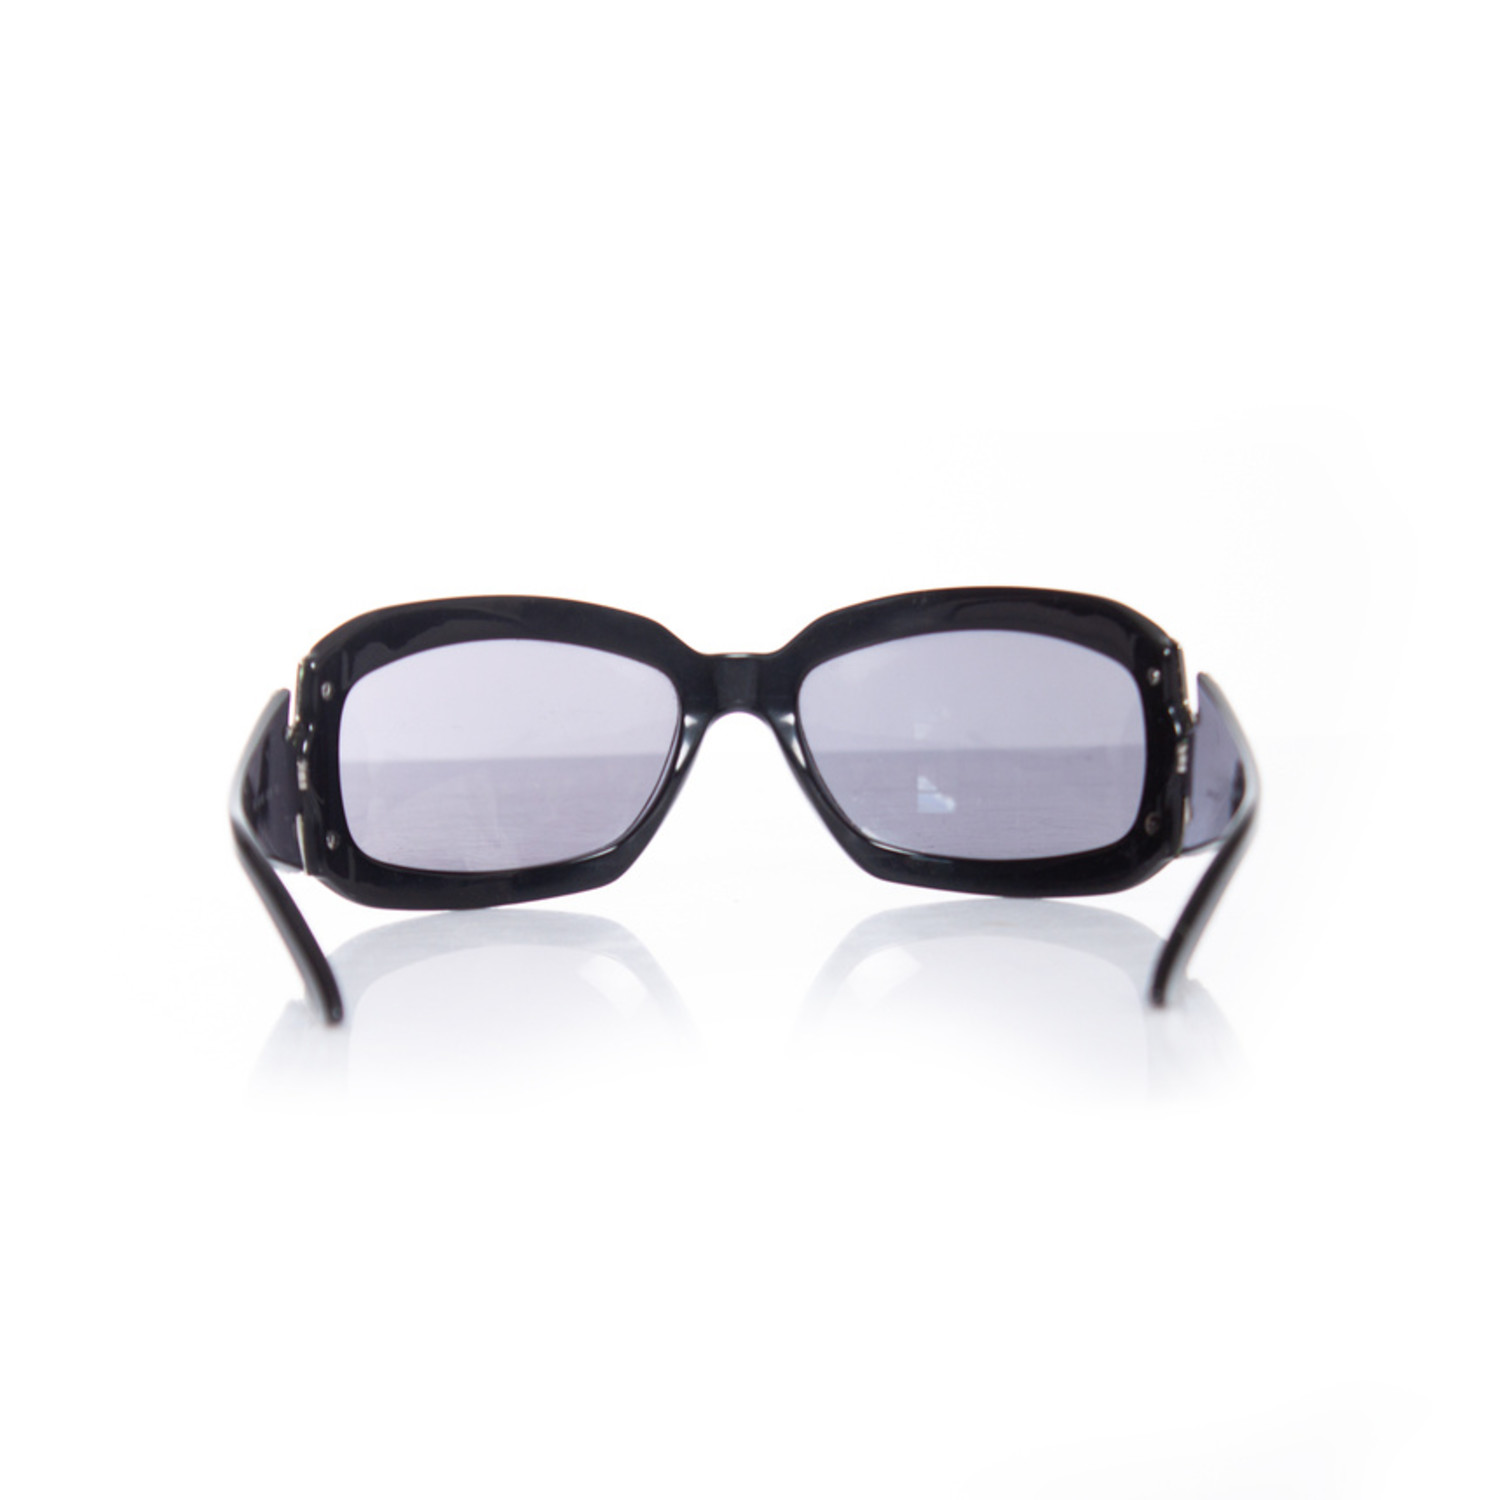 Bvlgari Sunglasses | Buy Online – Fashion Eyewear US